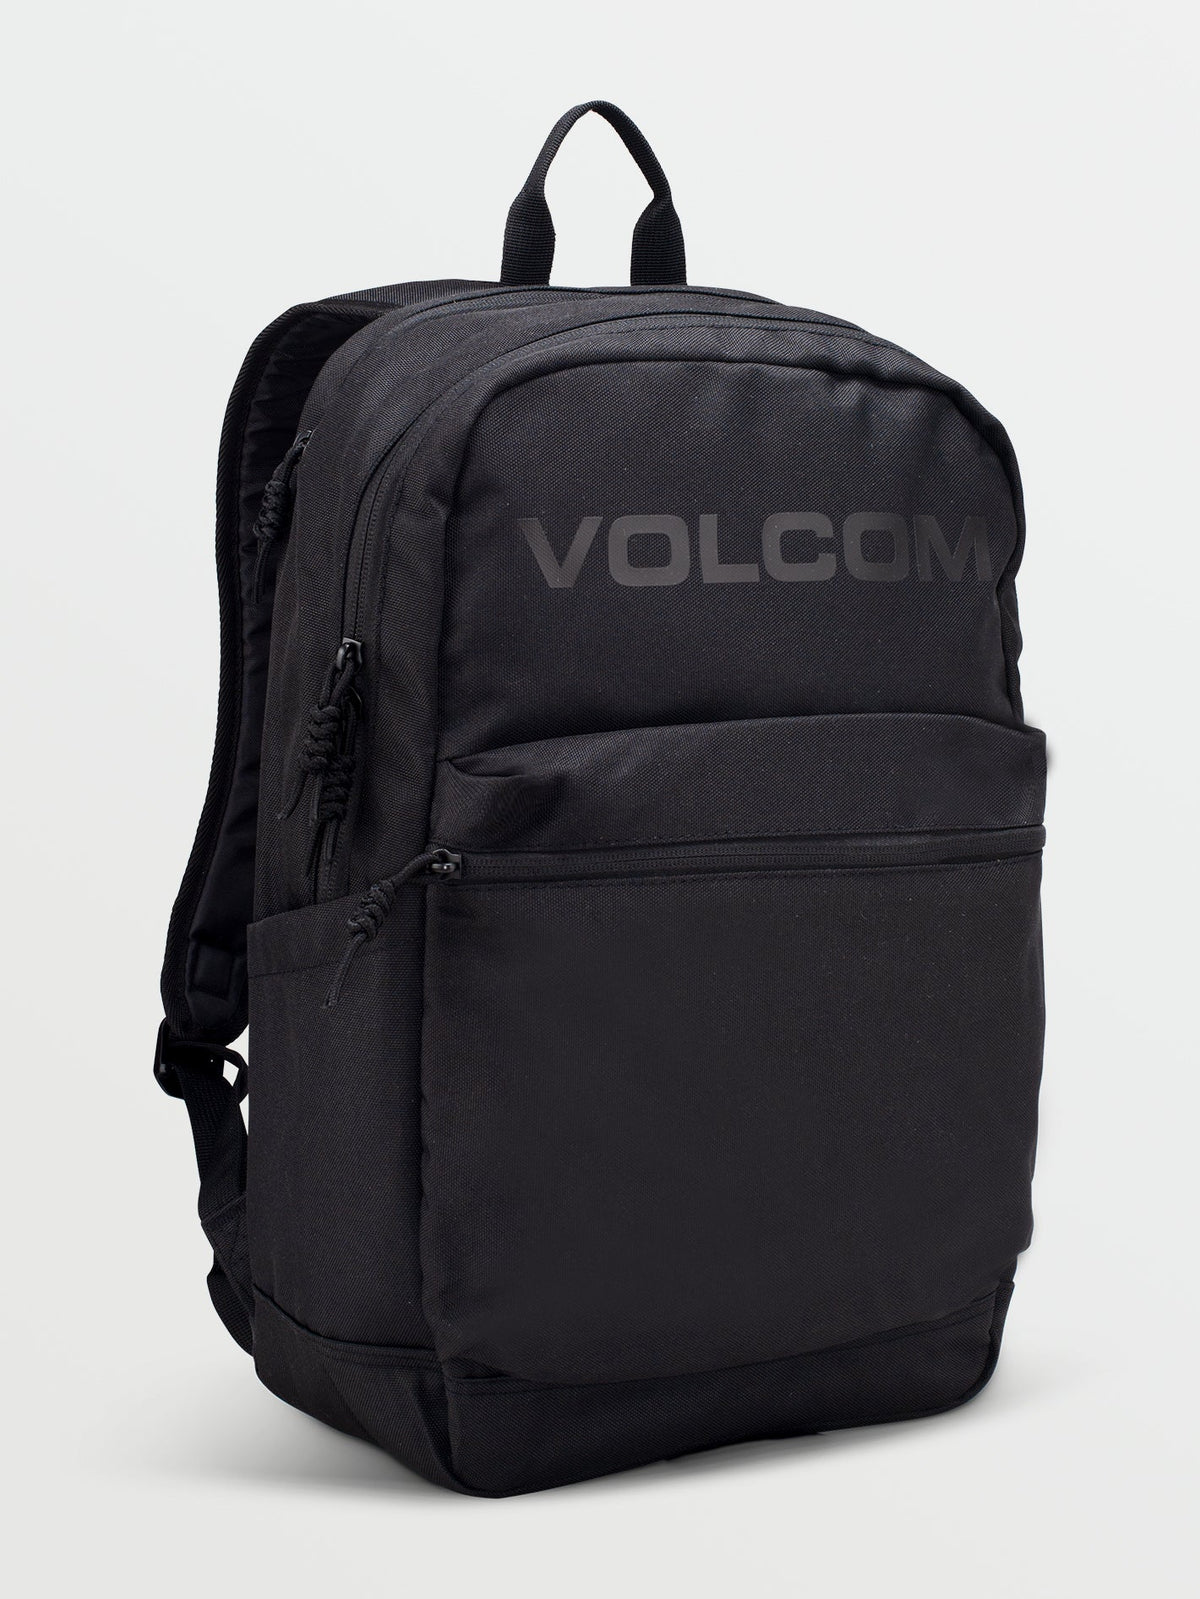 Volcom School Backpack Black